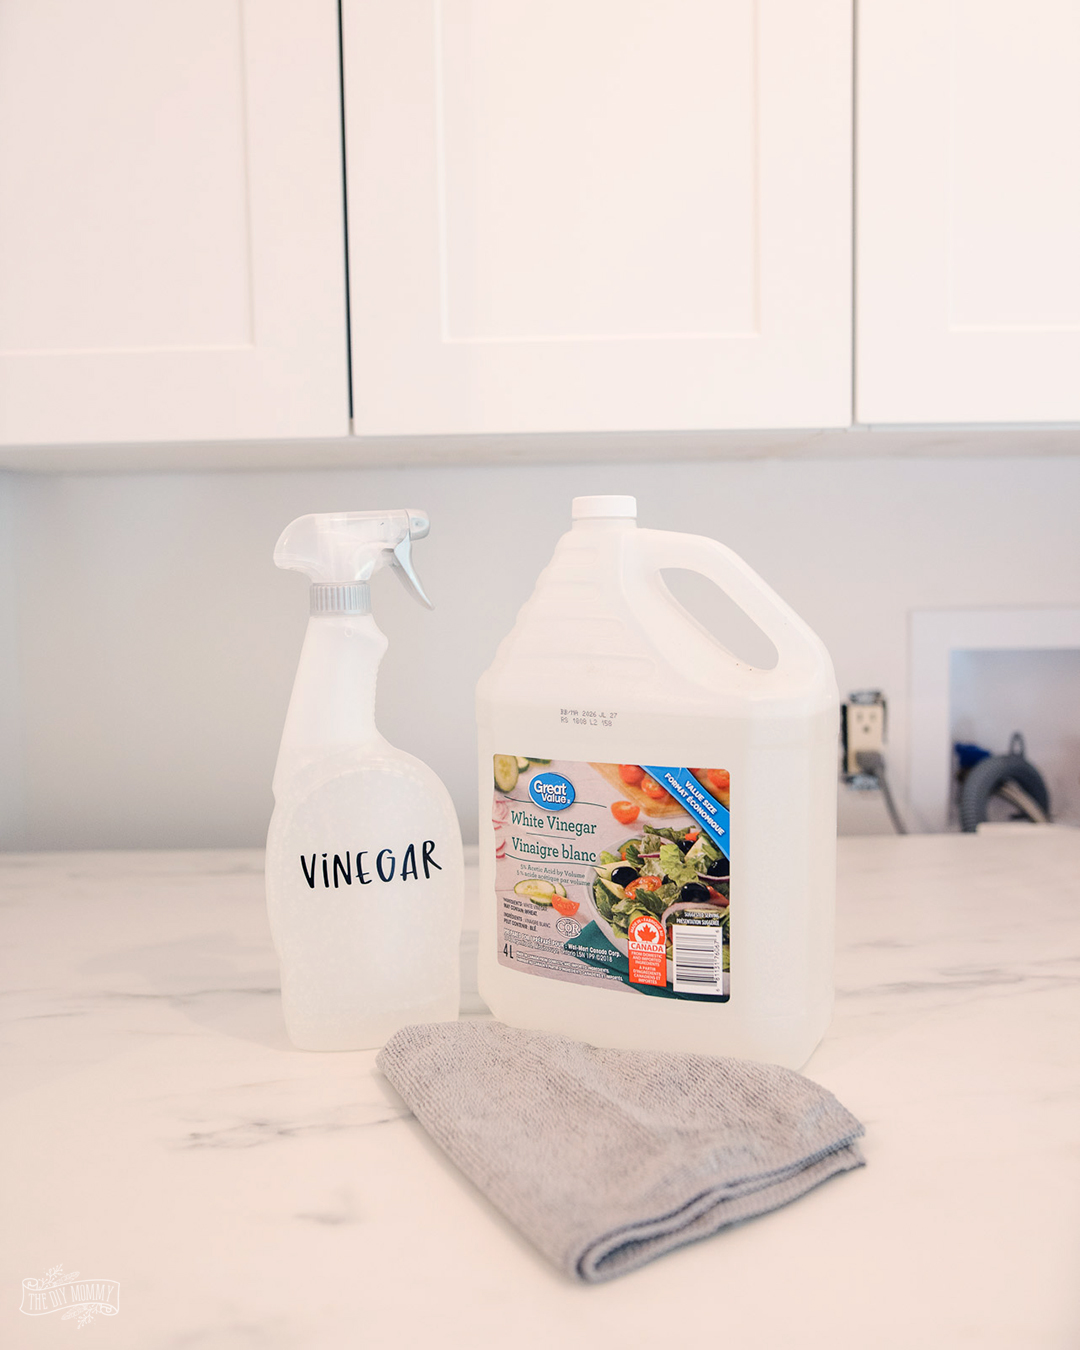 Using vinegar for cleaning